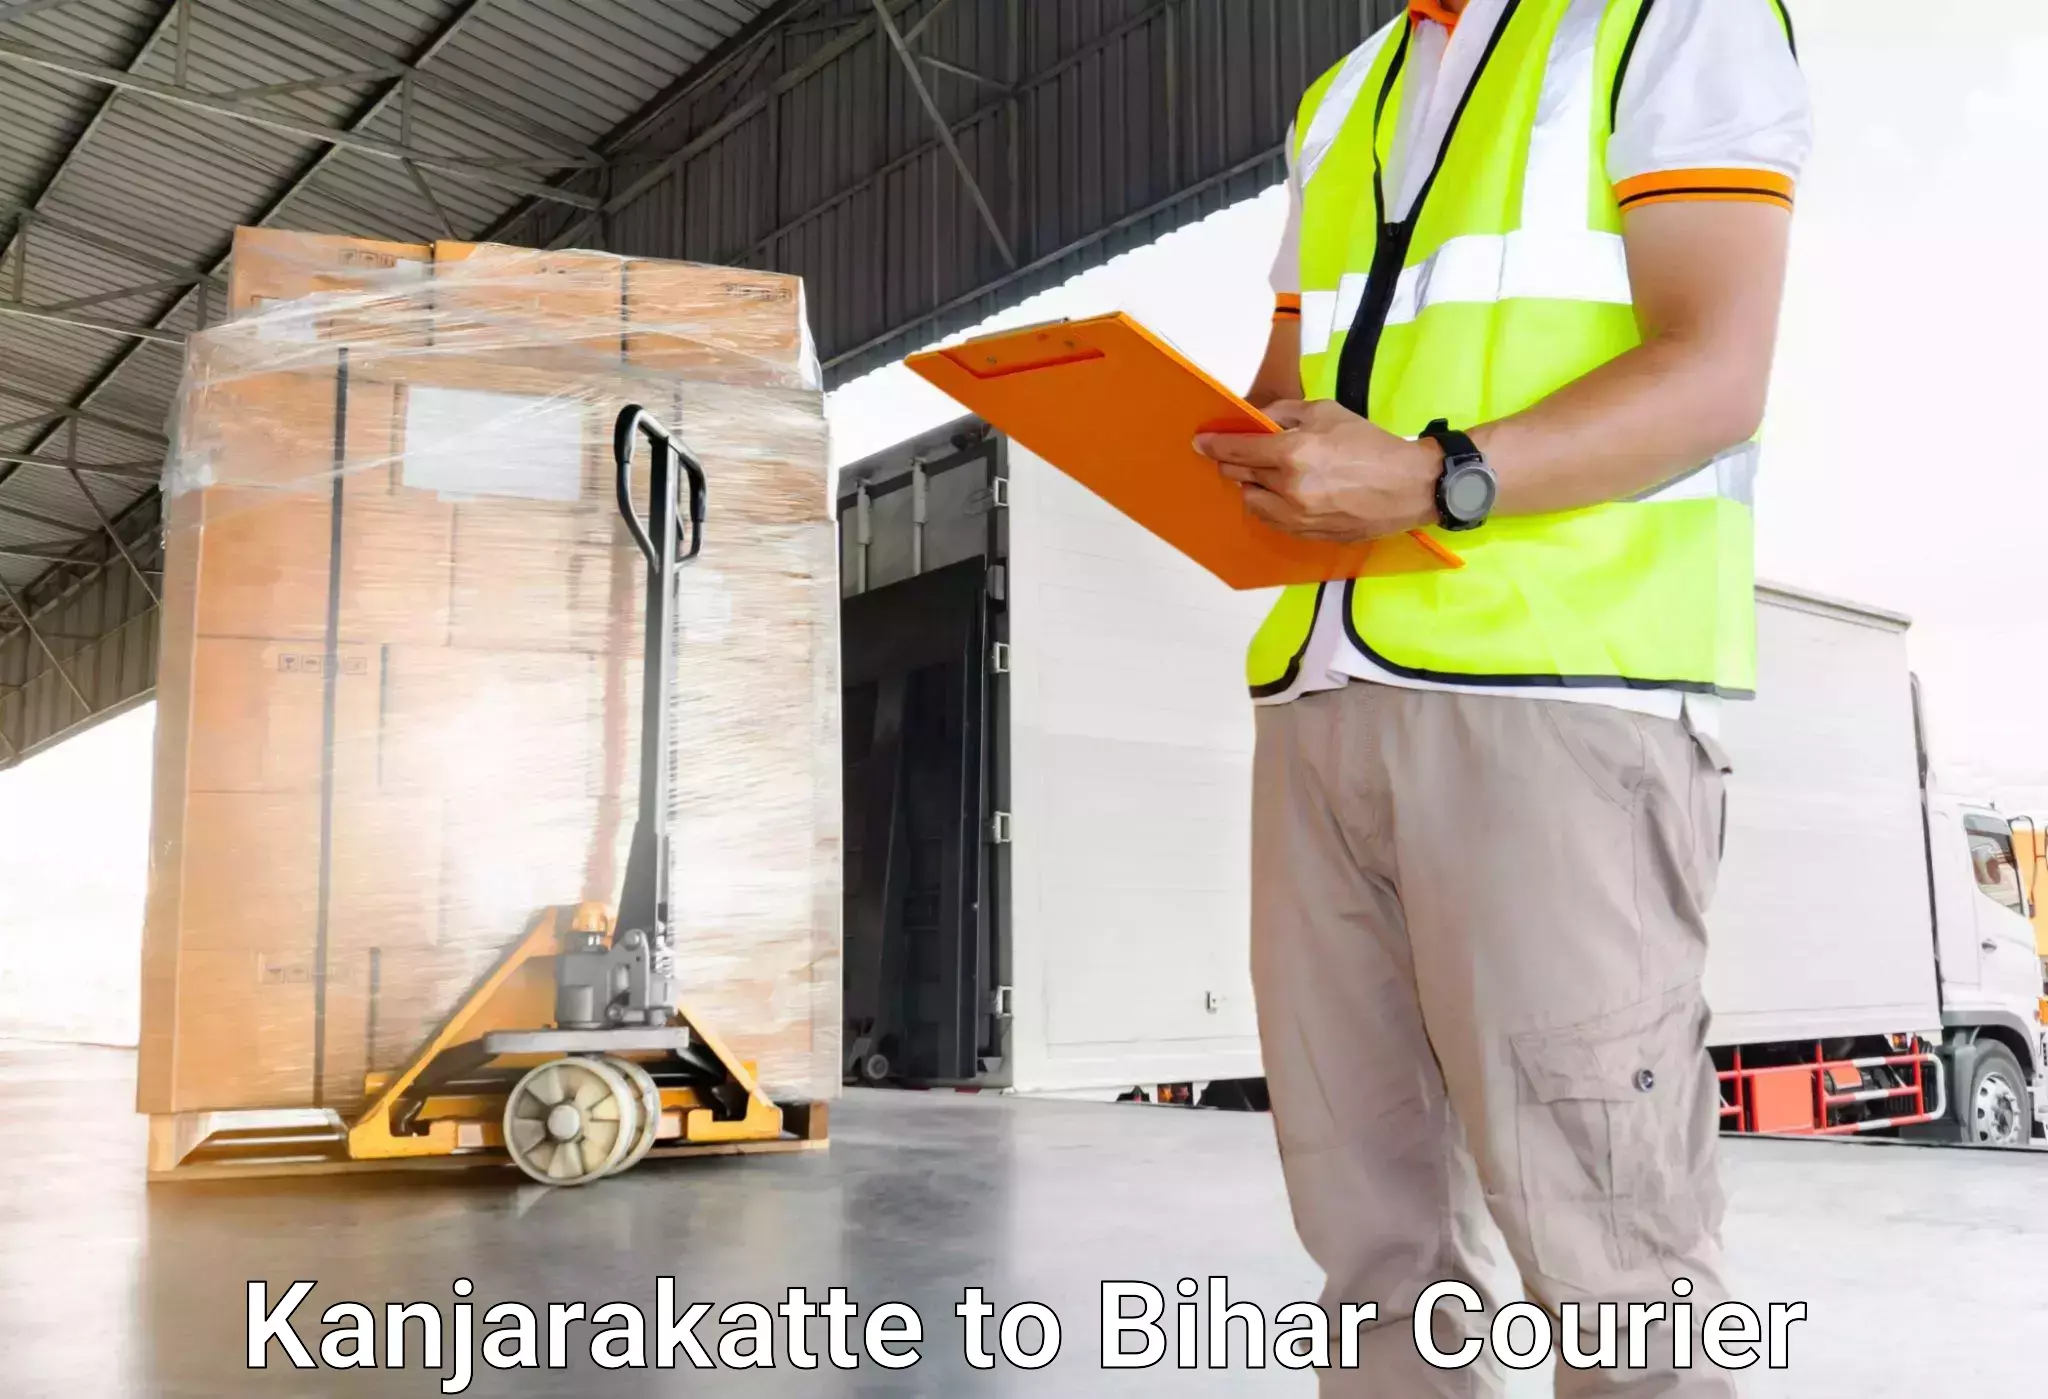 Luggage shipment tracking Kanjarakatte to Sharfuddinpur